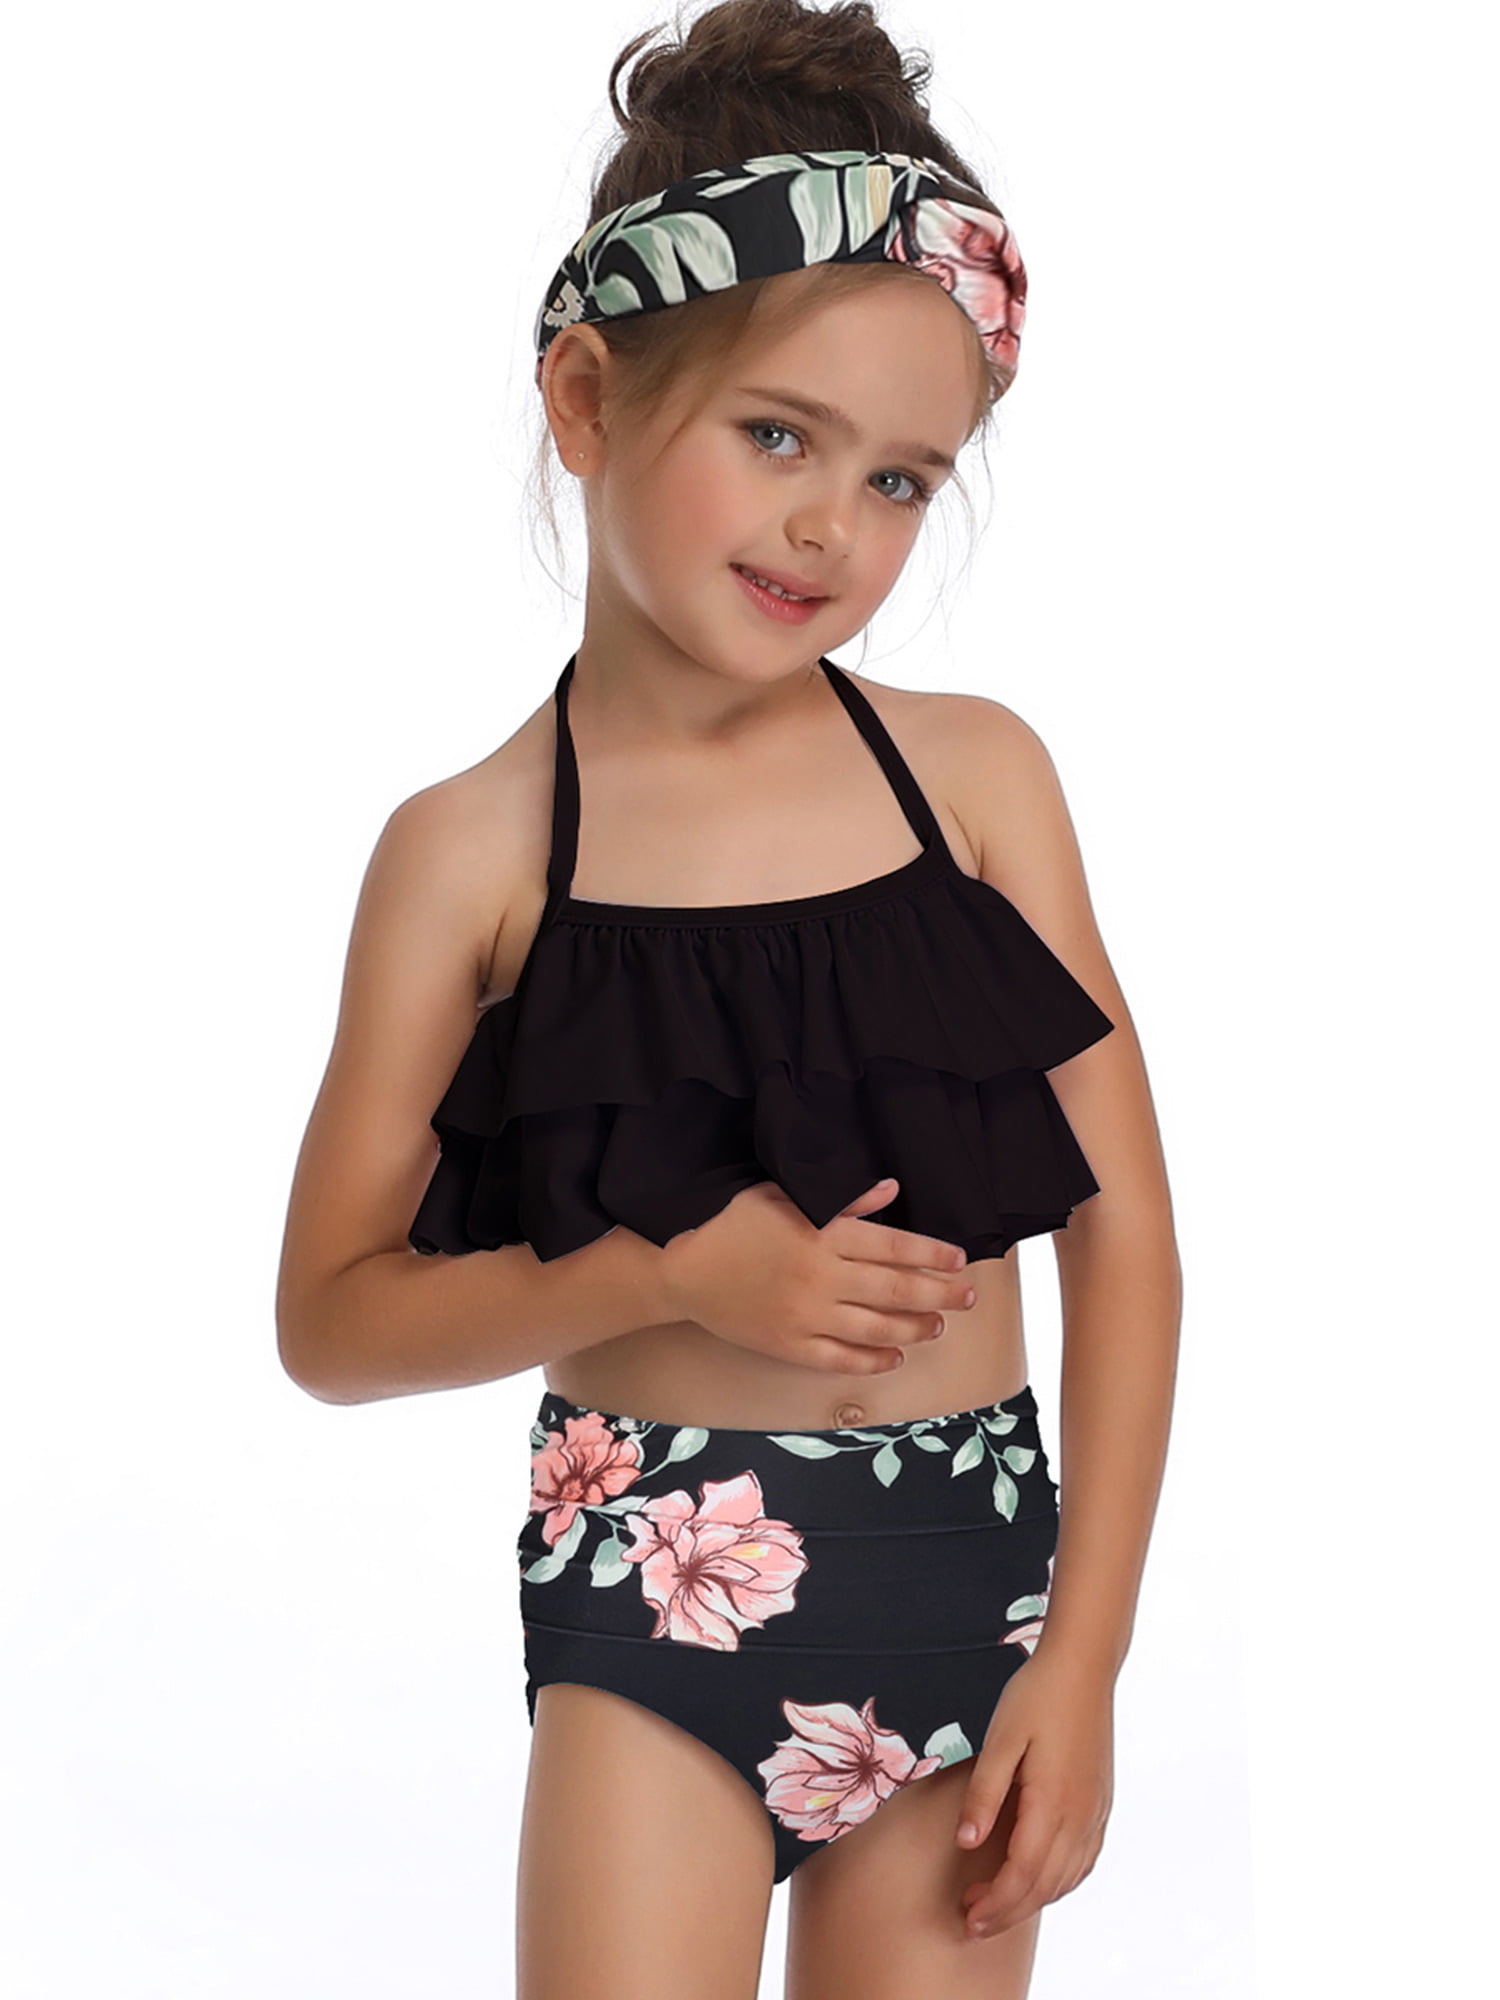 TenMet 2Pcs Baby Girls Mommy and Me Matching Family Swimsuit Ruffle Women Swimwear Kids Bikini Bathing Suit Beachwear Sets